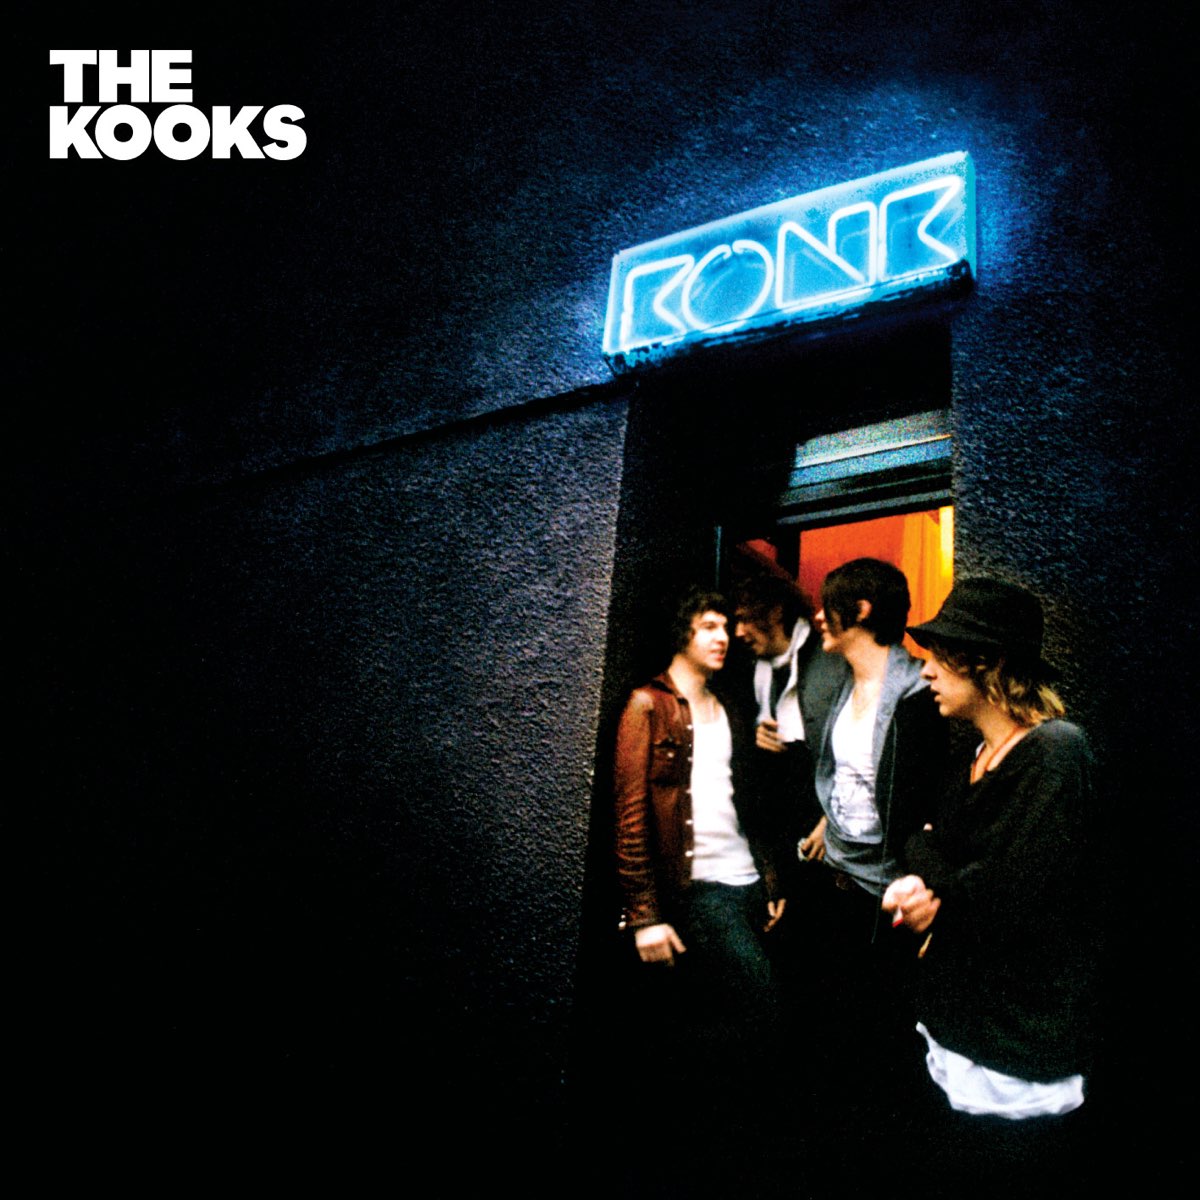 The Kooks — Konk cover artwork